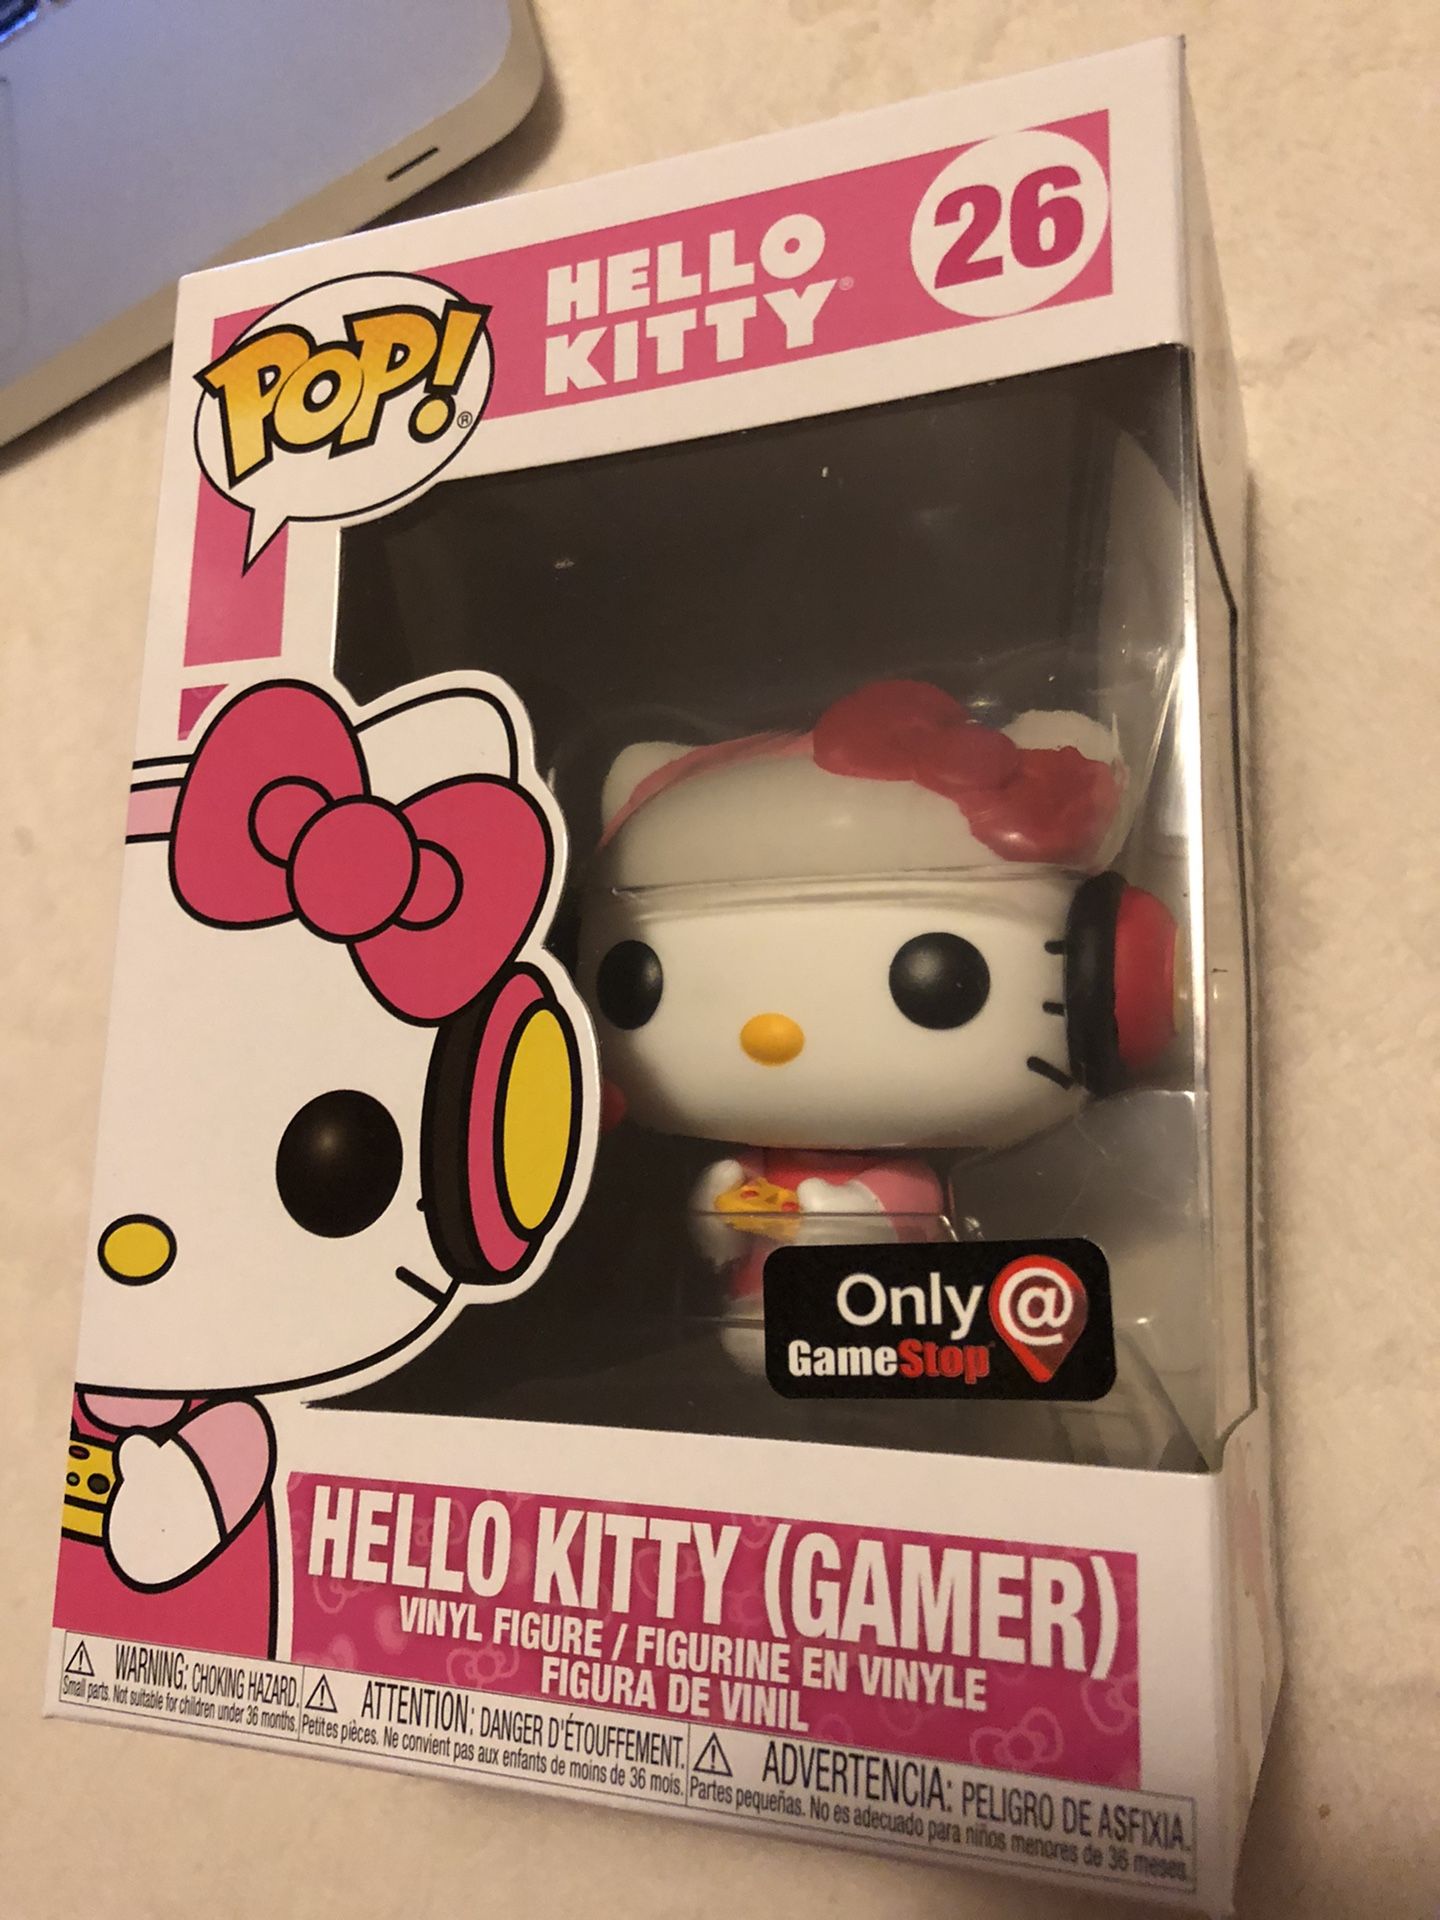 Brand new Funko pop Hello Kitty gamer (exclusive version)